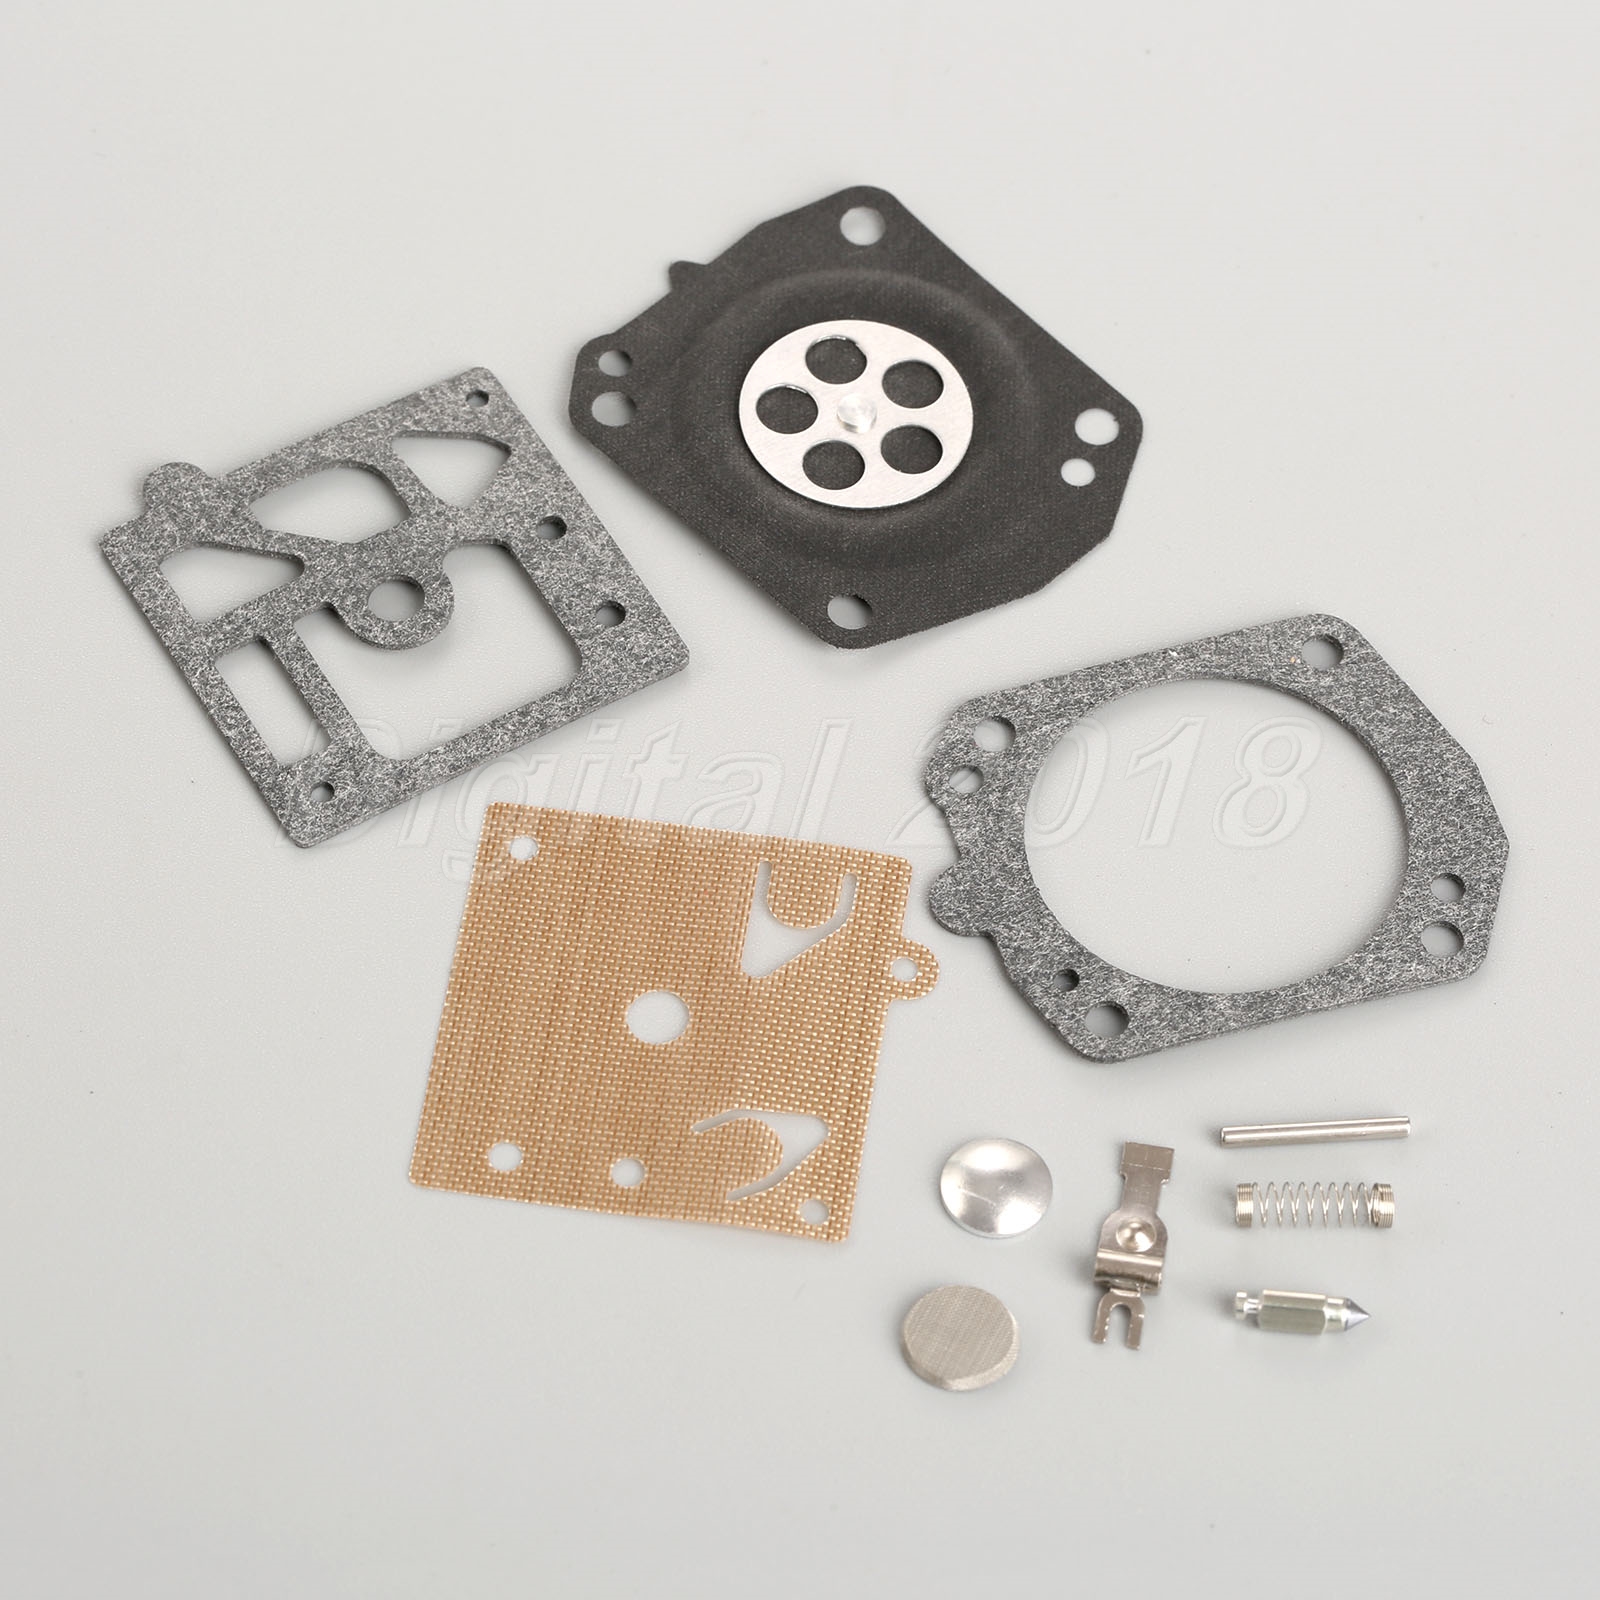 1x Chainsaw Carburetor Repair Kit For Walbro Stihl 029 039 044 Ms290 Ms310 Parts 653334464422 Ebay